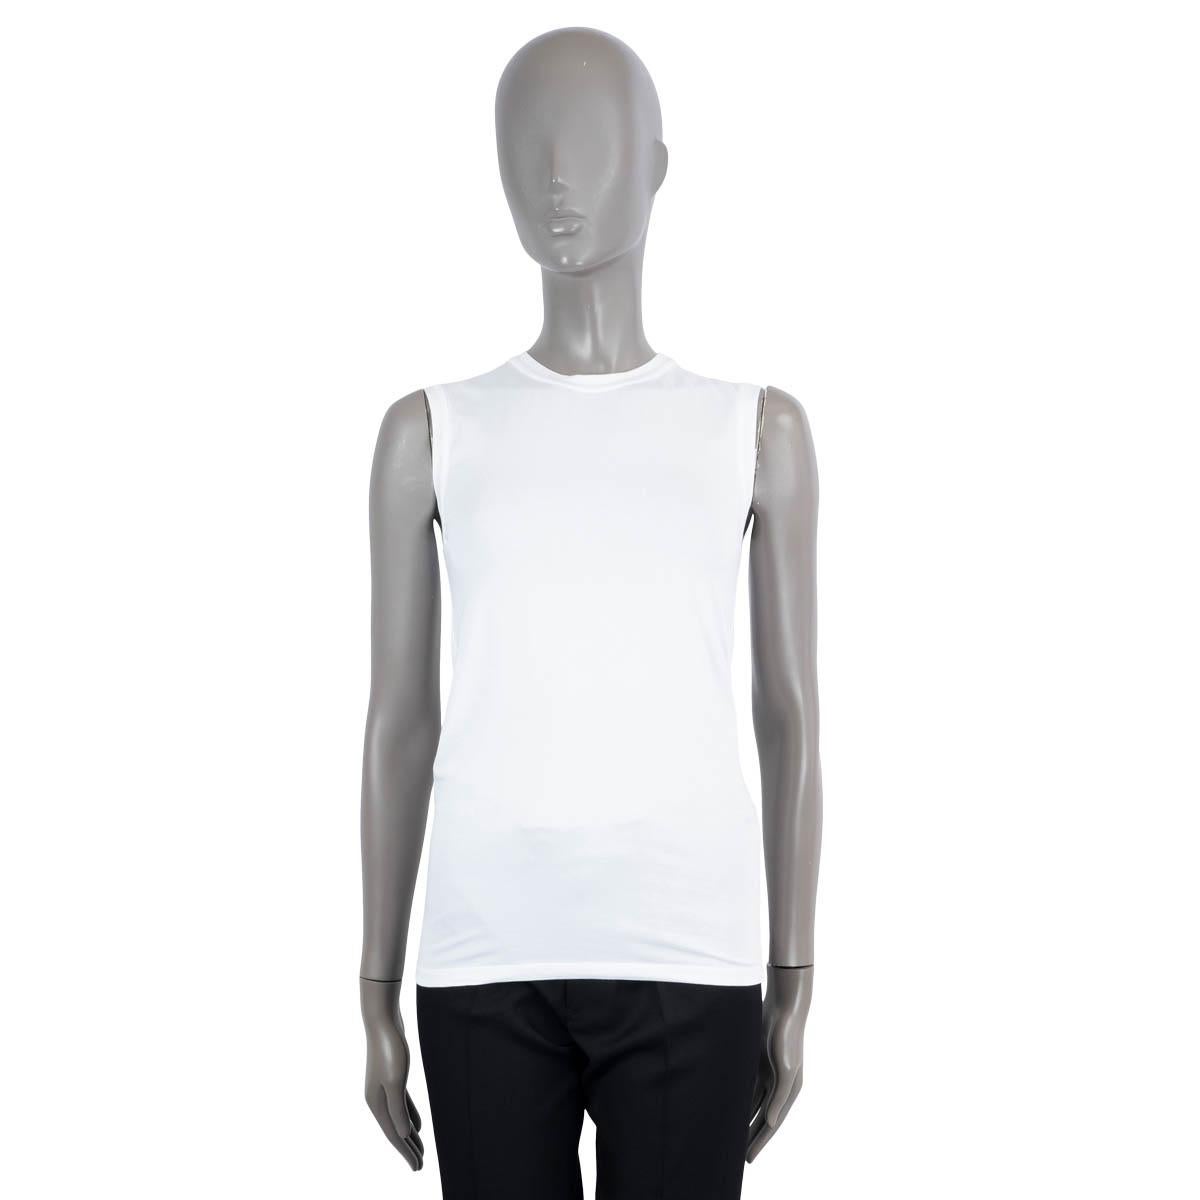 BRUNELLO CUCINELLI white cotton MONILI CHAIN Tank Top Shirt S